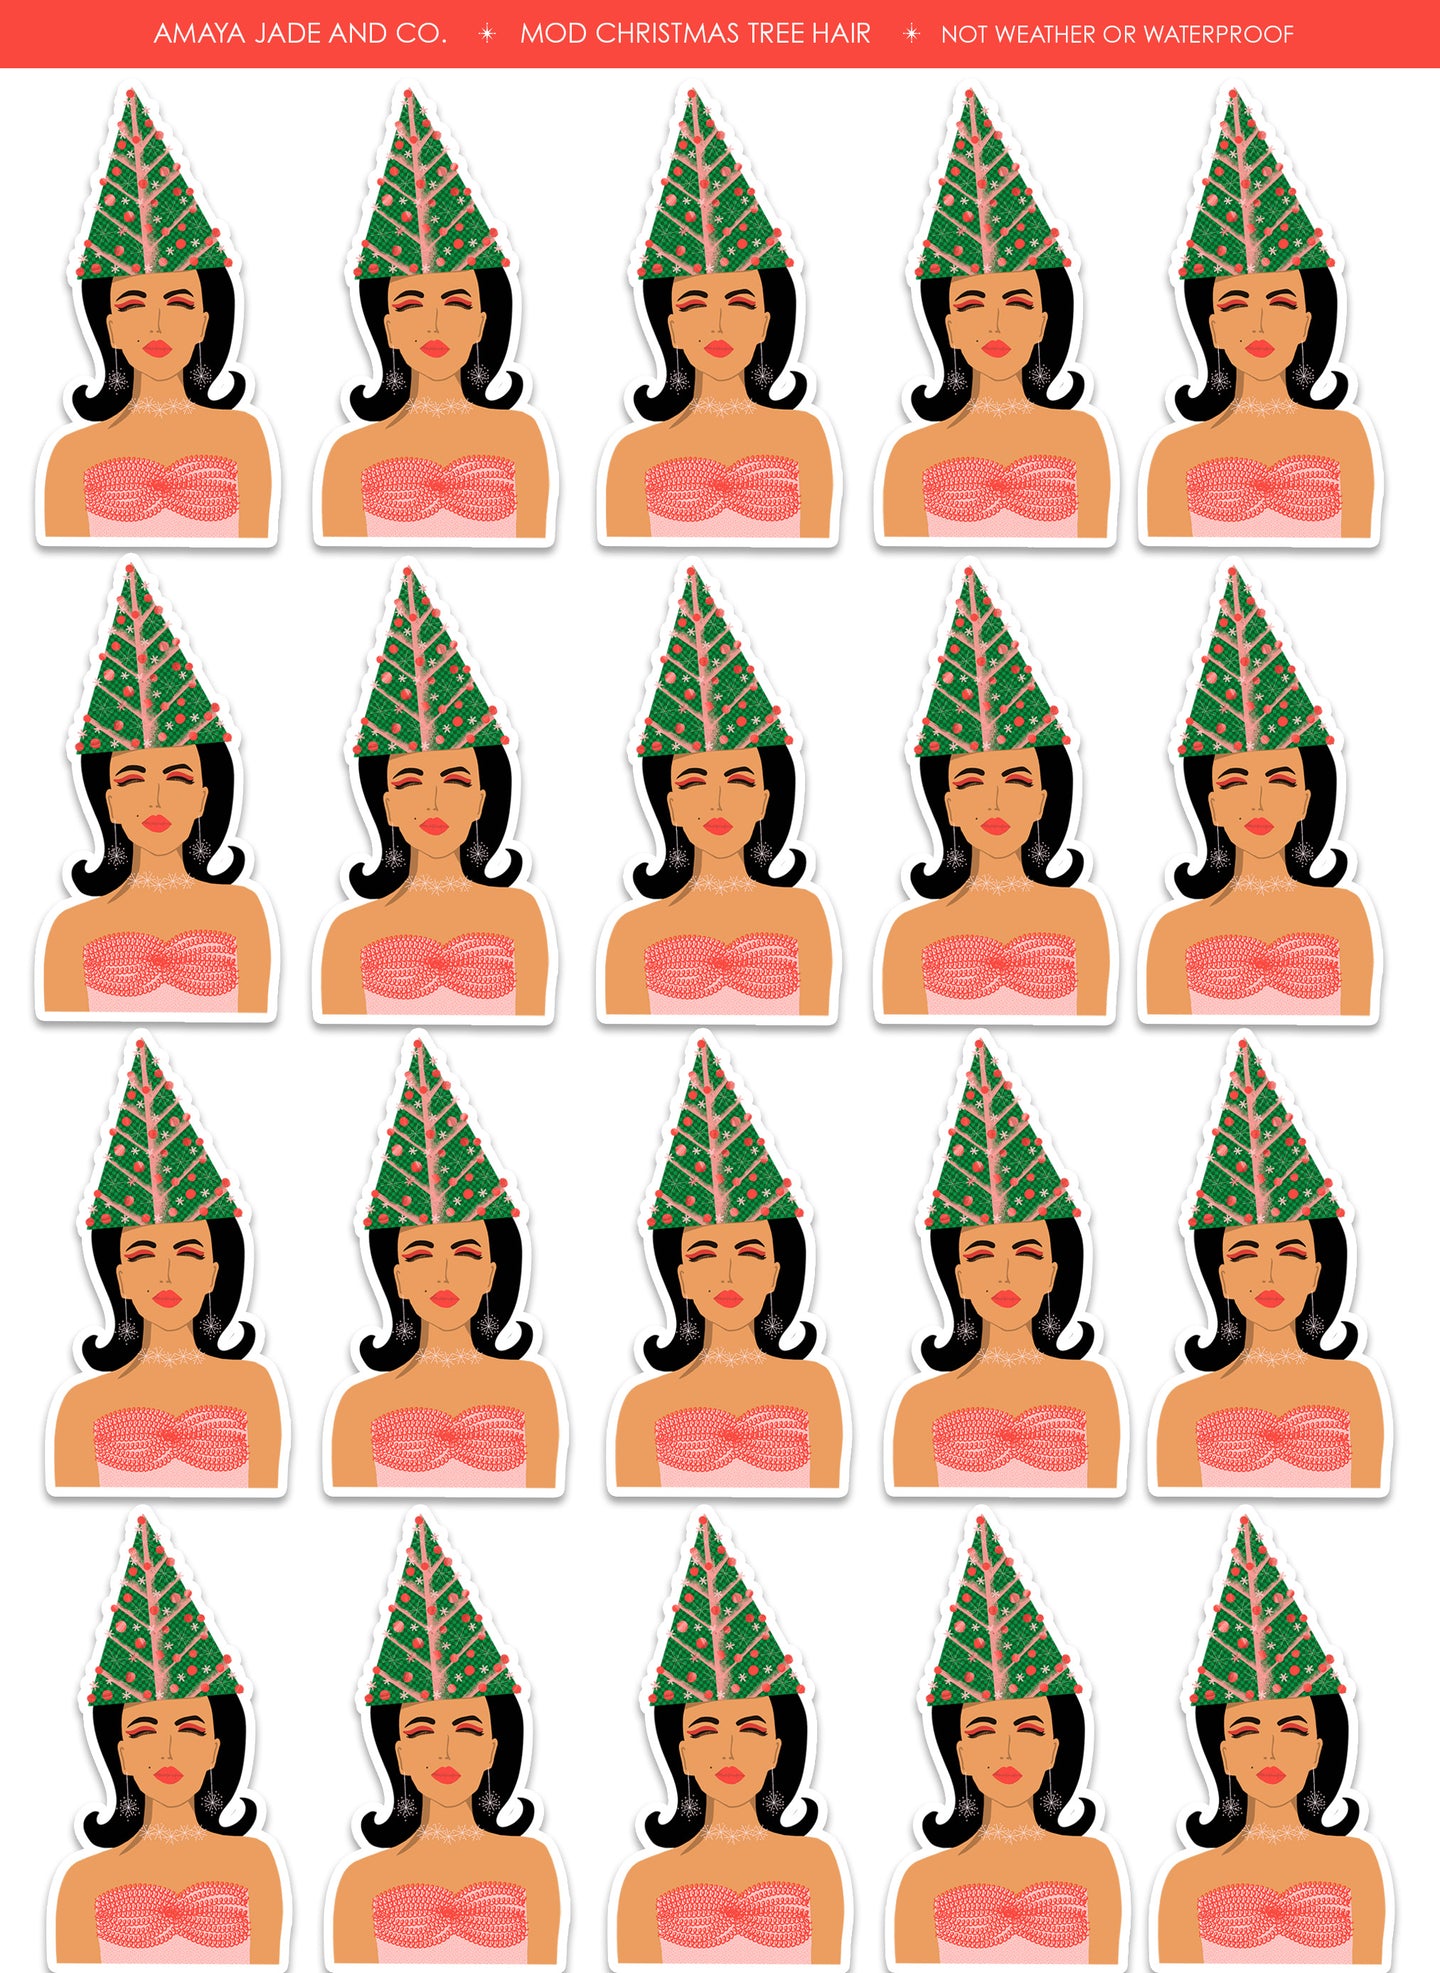 Mod Christmas Tree Hair Art Sticker Set